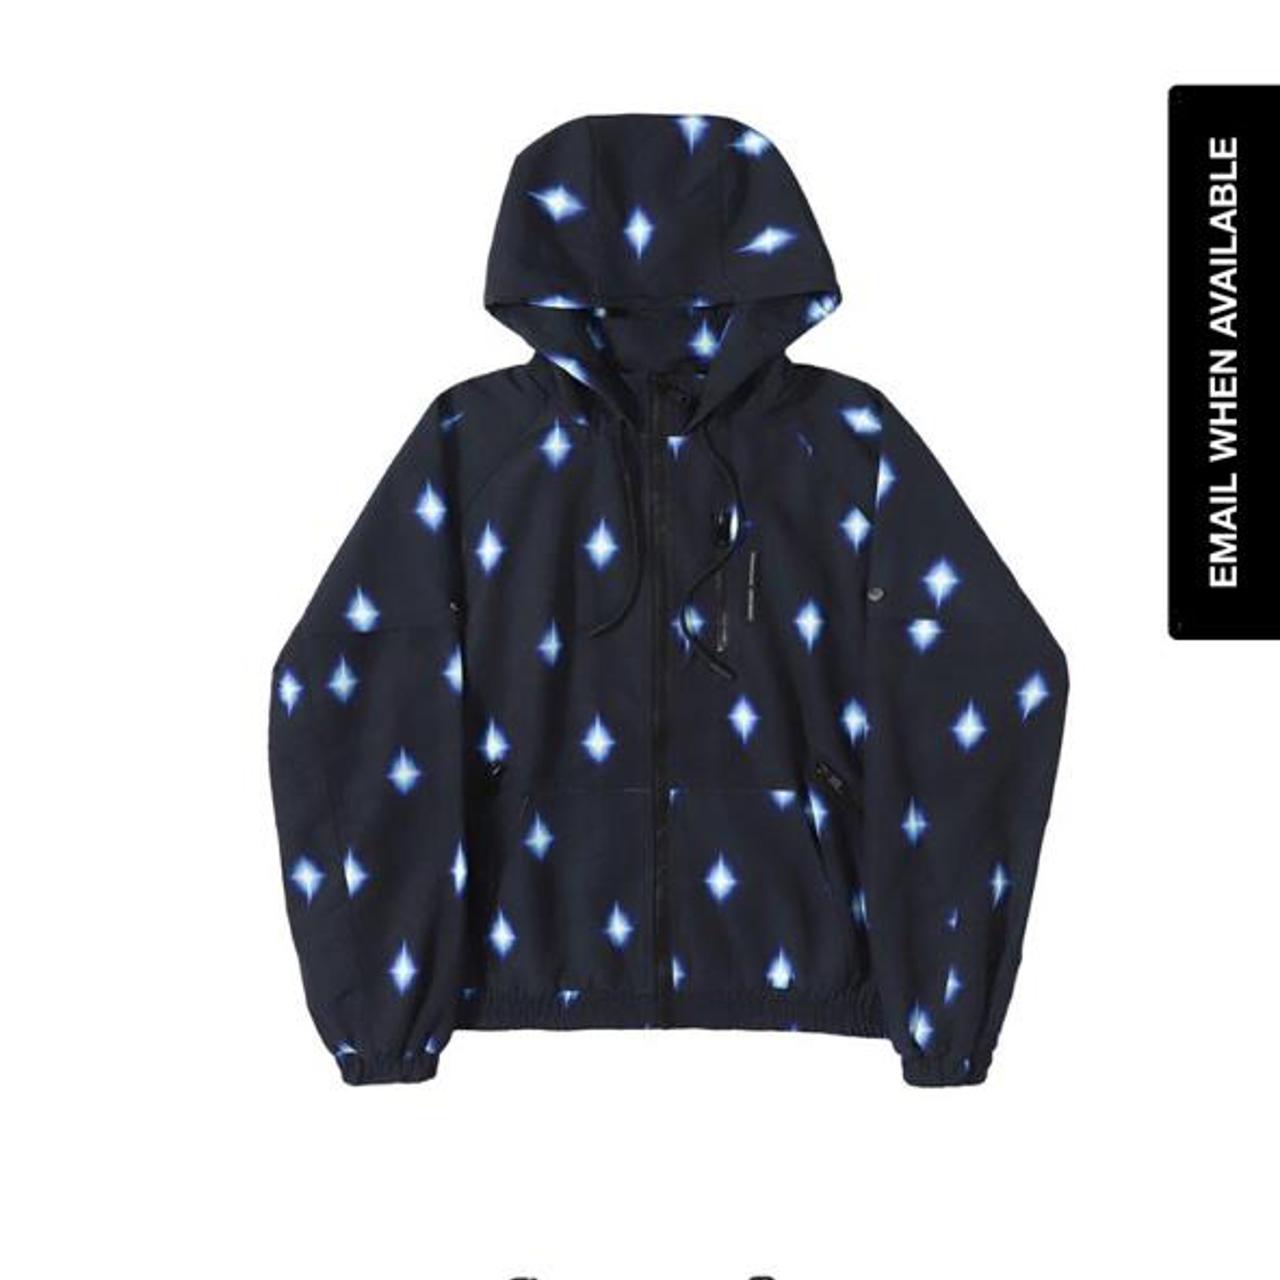 unknown london black star zip jacket, size small but... - Depop